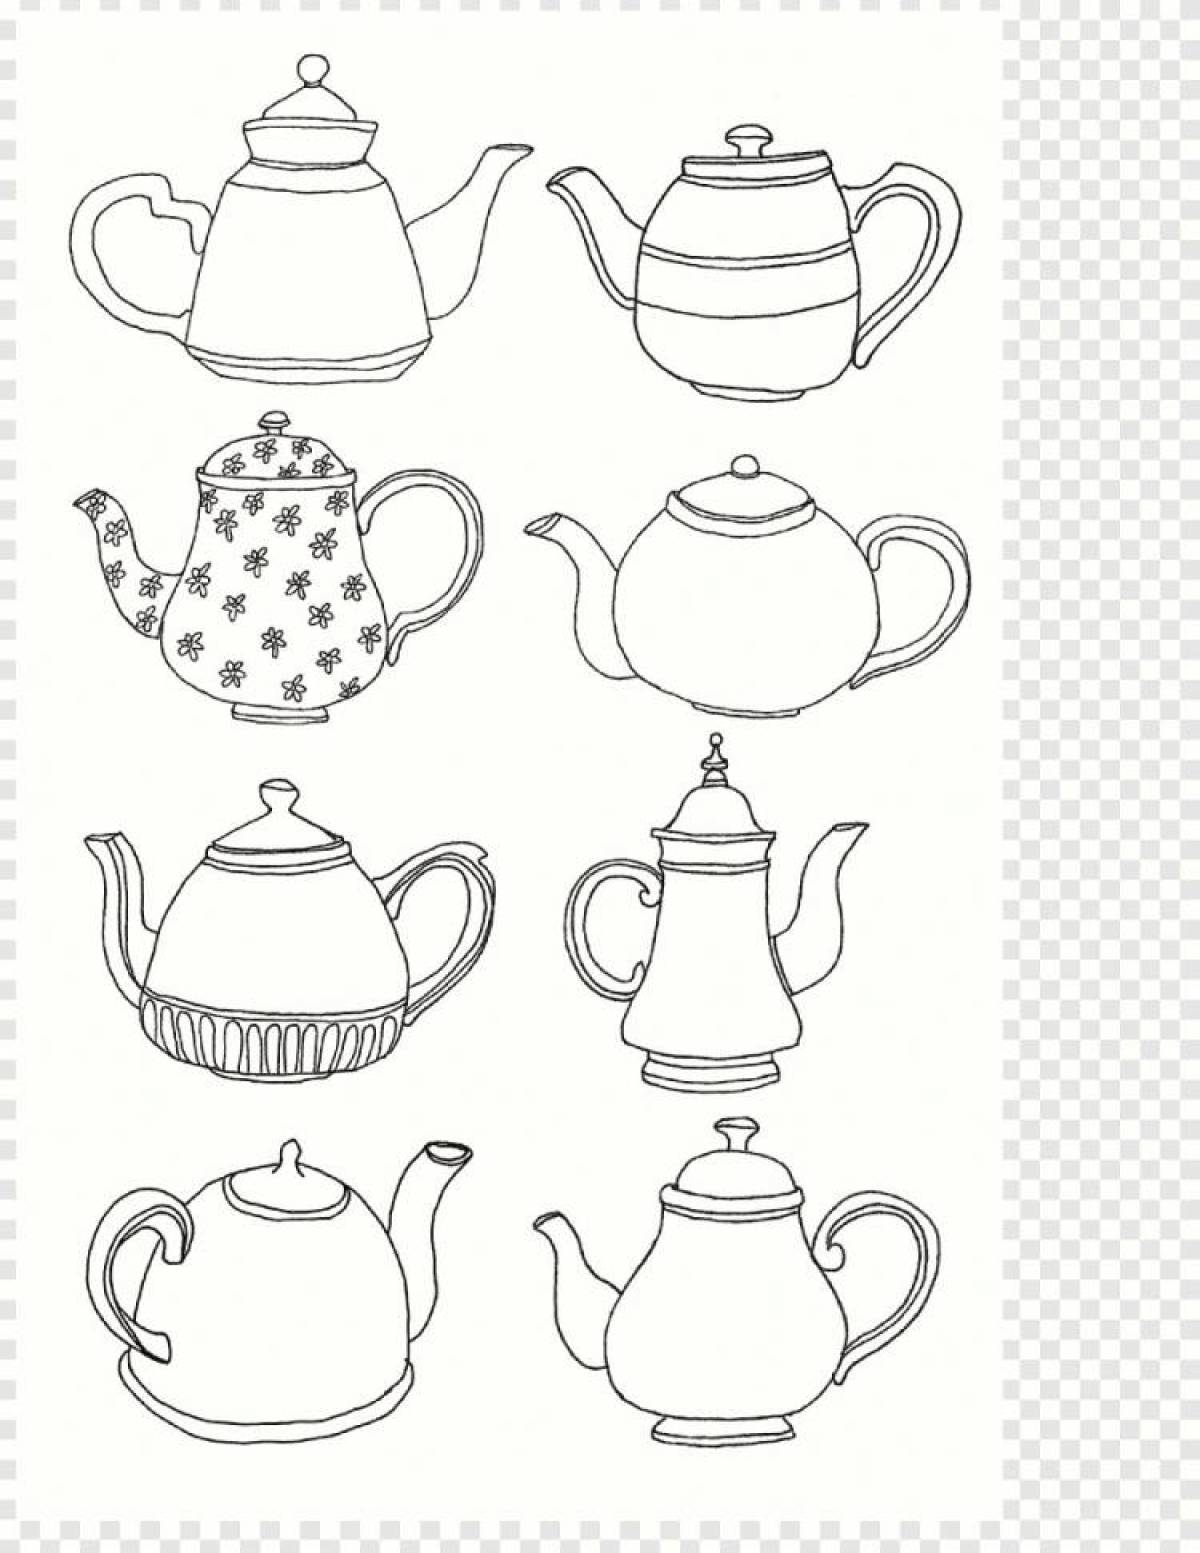 Impressive tea set coloring page